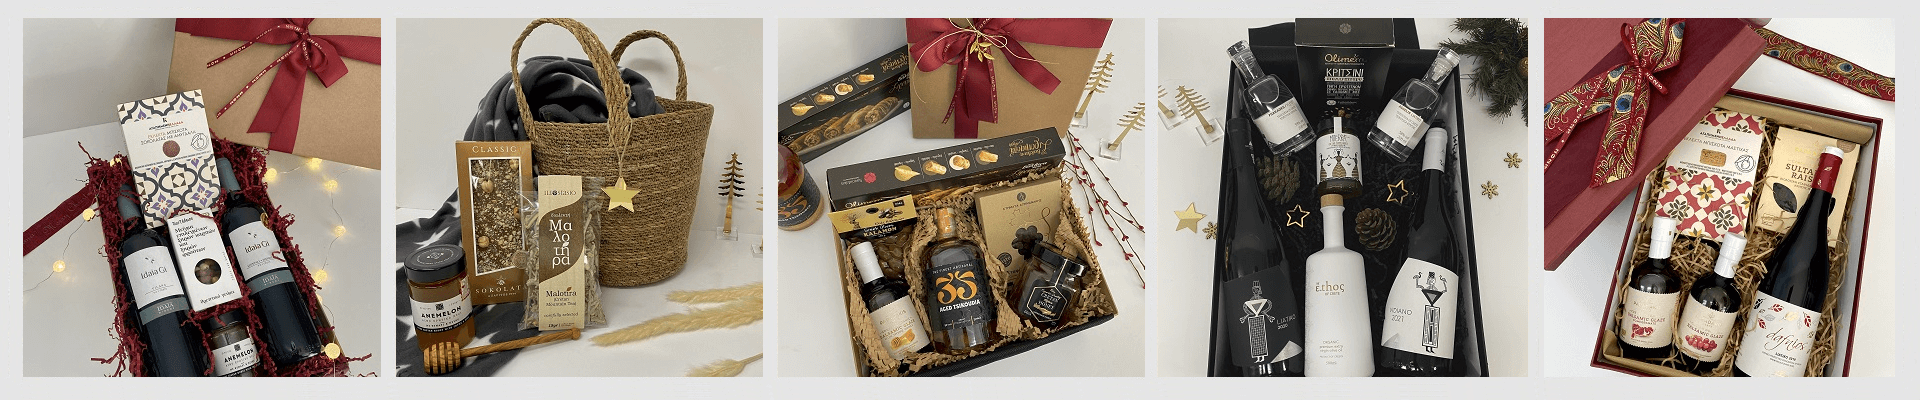 Christmas Gifts, Cretan Gifts, Tsikoudia raki sariki honey traditional products goods from the island of Crete, mycretangoods